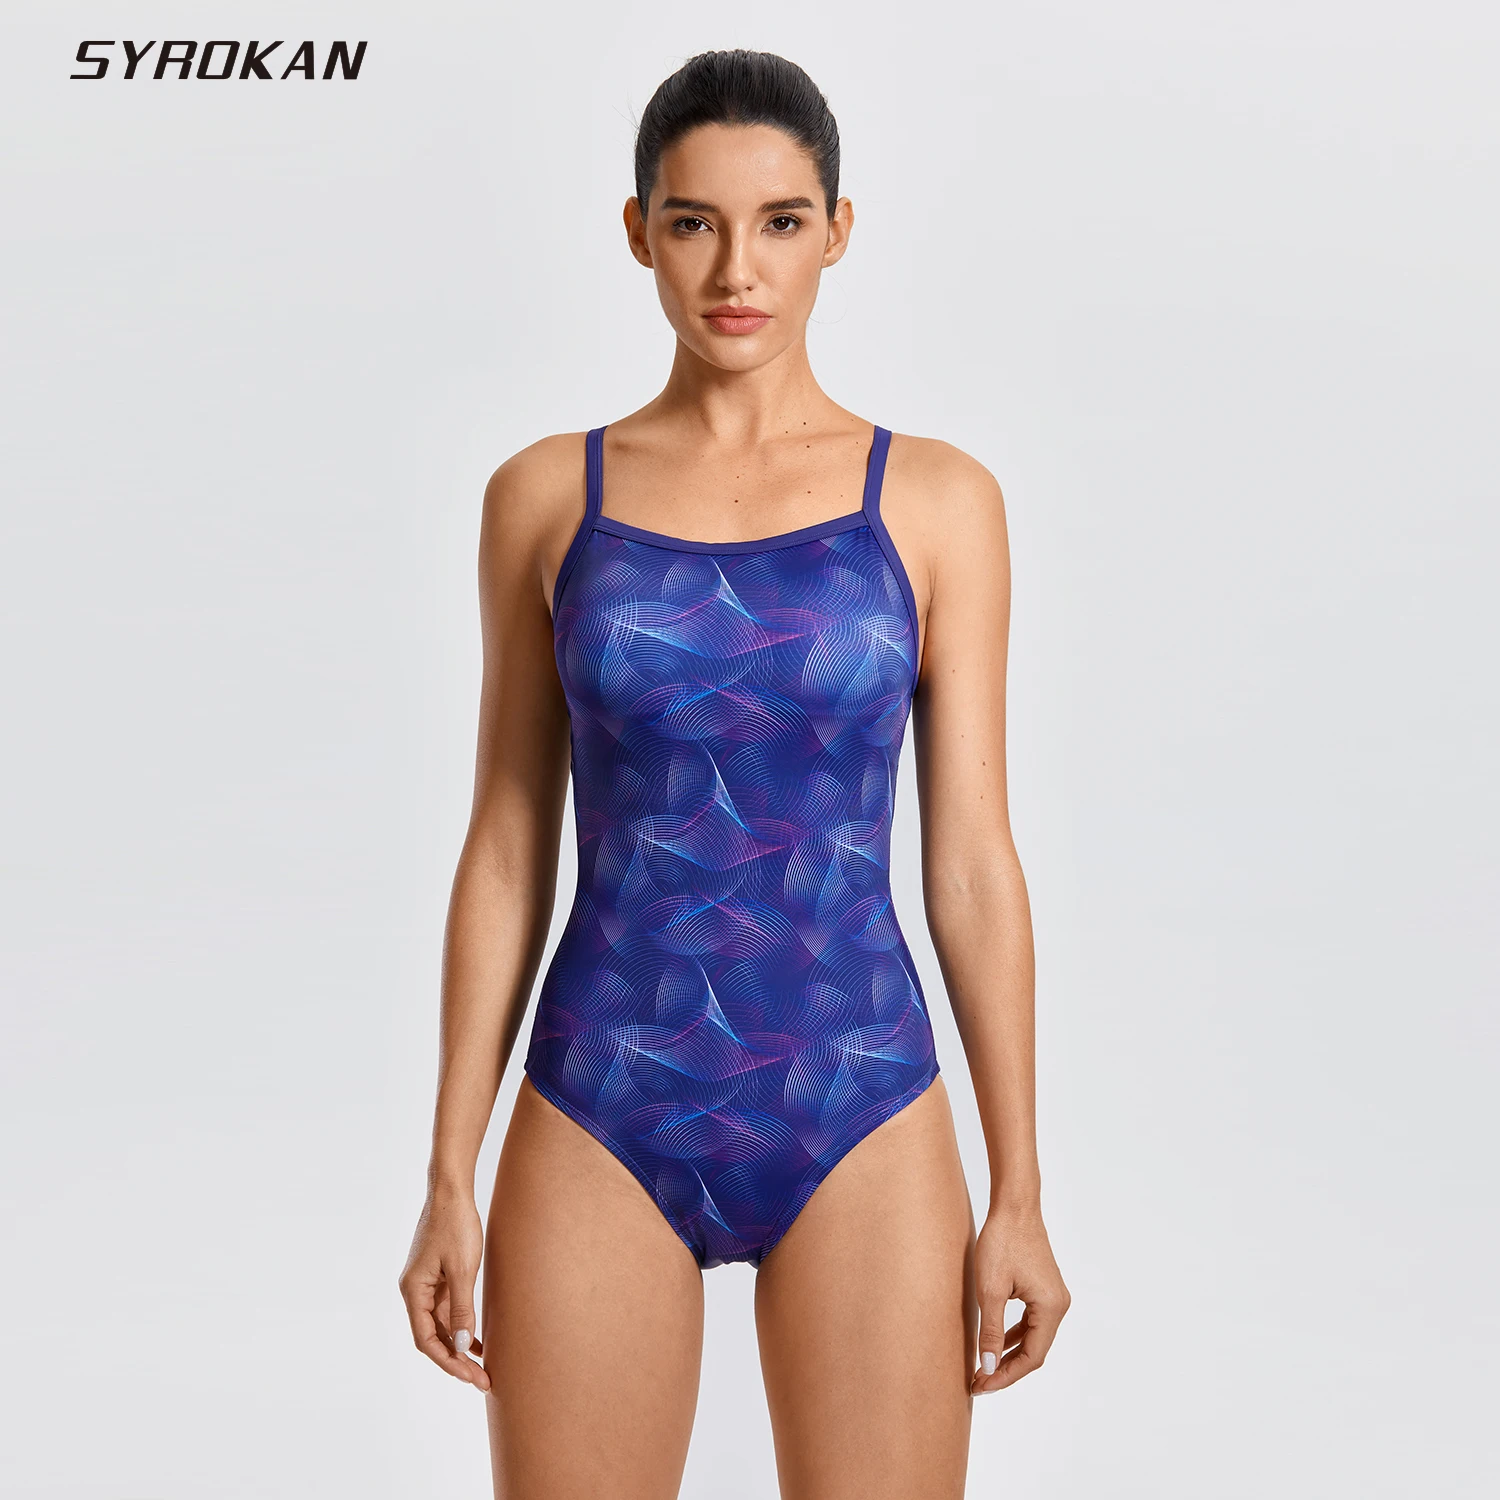 

SYROKAN Women's Basic Sleek Solid Elite Training Sport Athletic One Piece Swimsuit